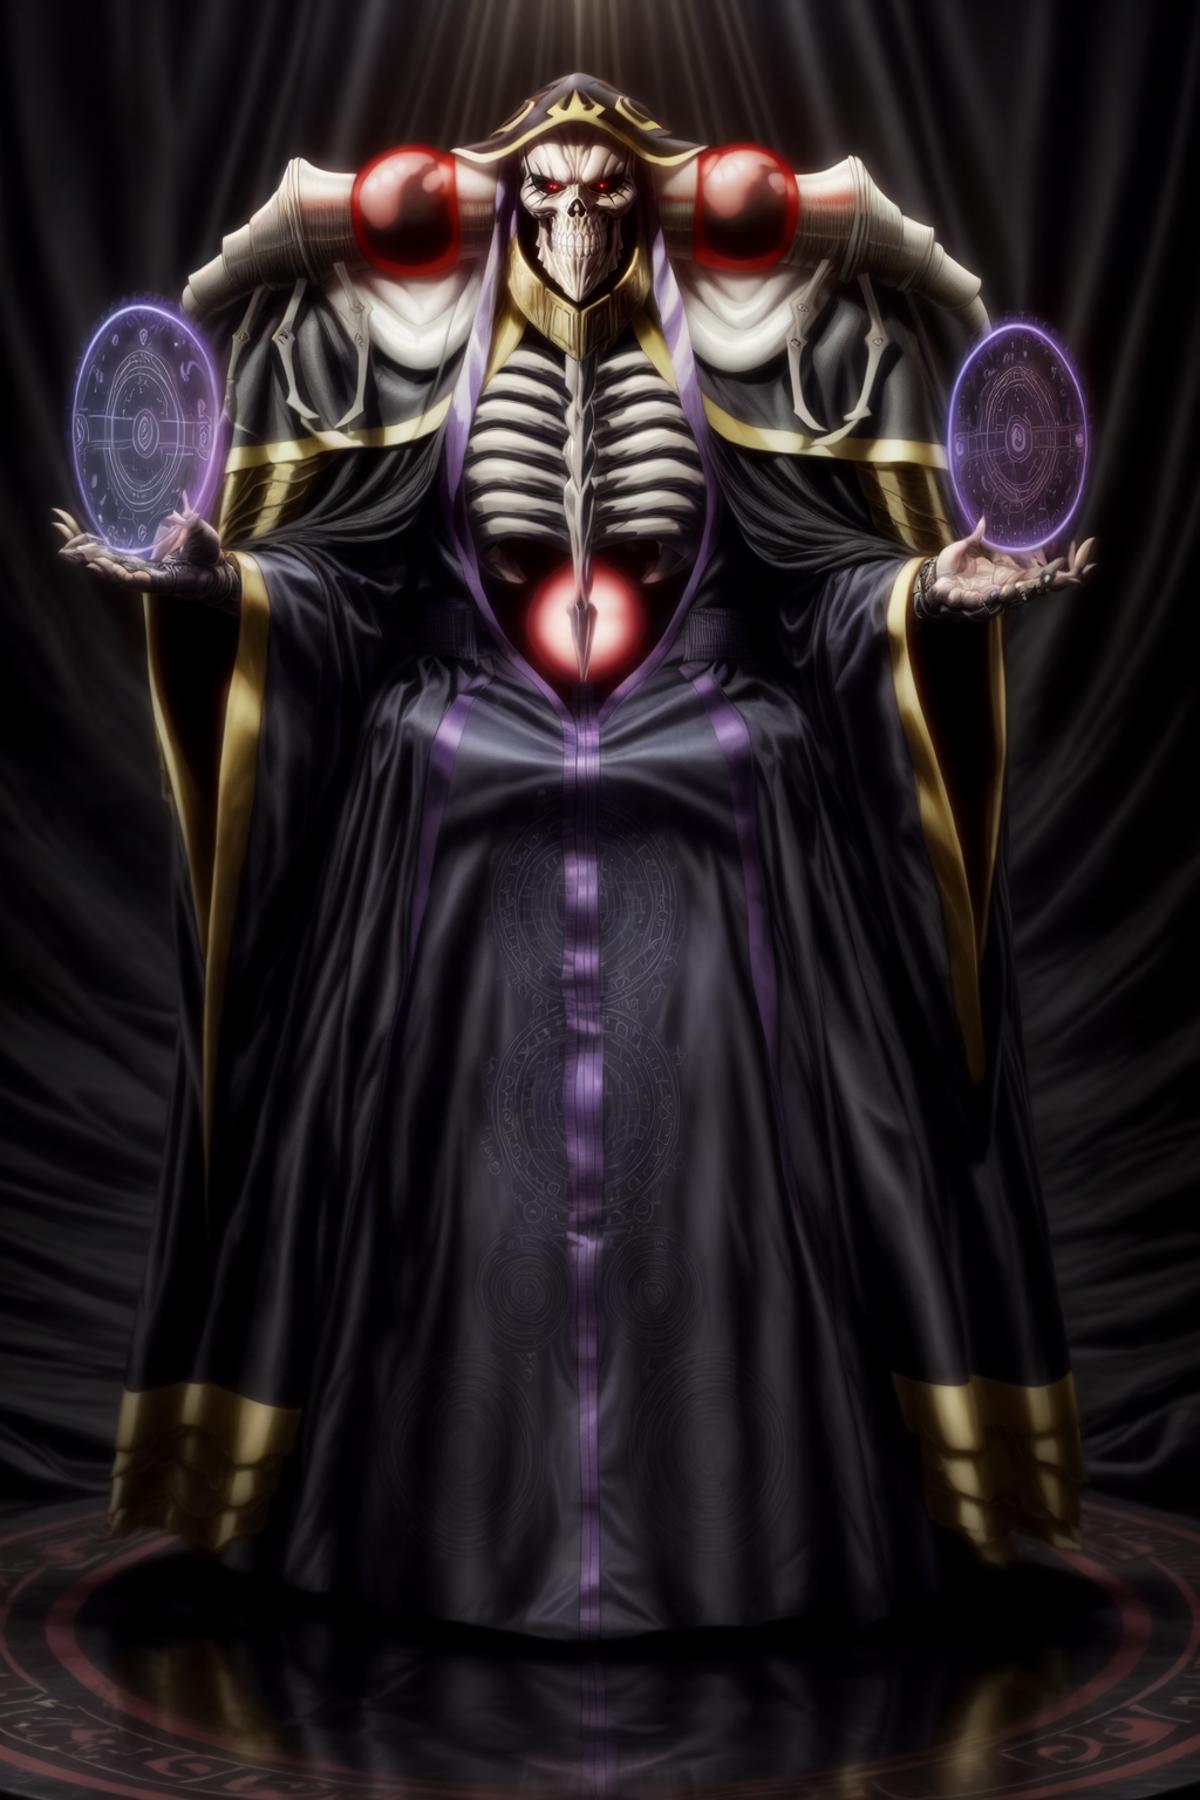 Ainz Ooal Gown | Overlord image by minecraftproboss3600